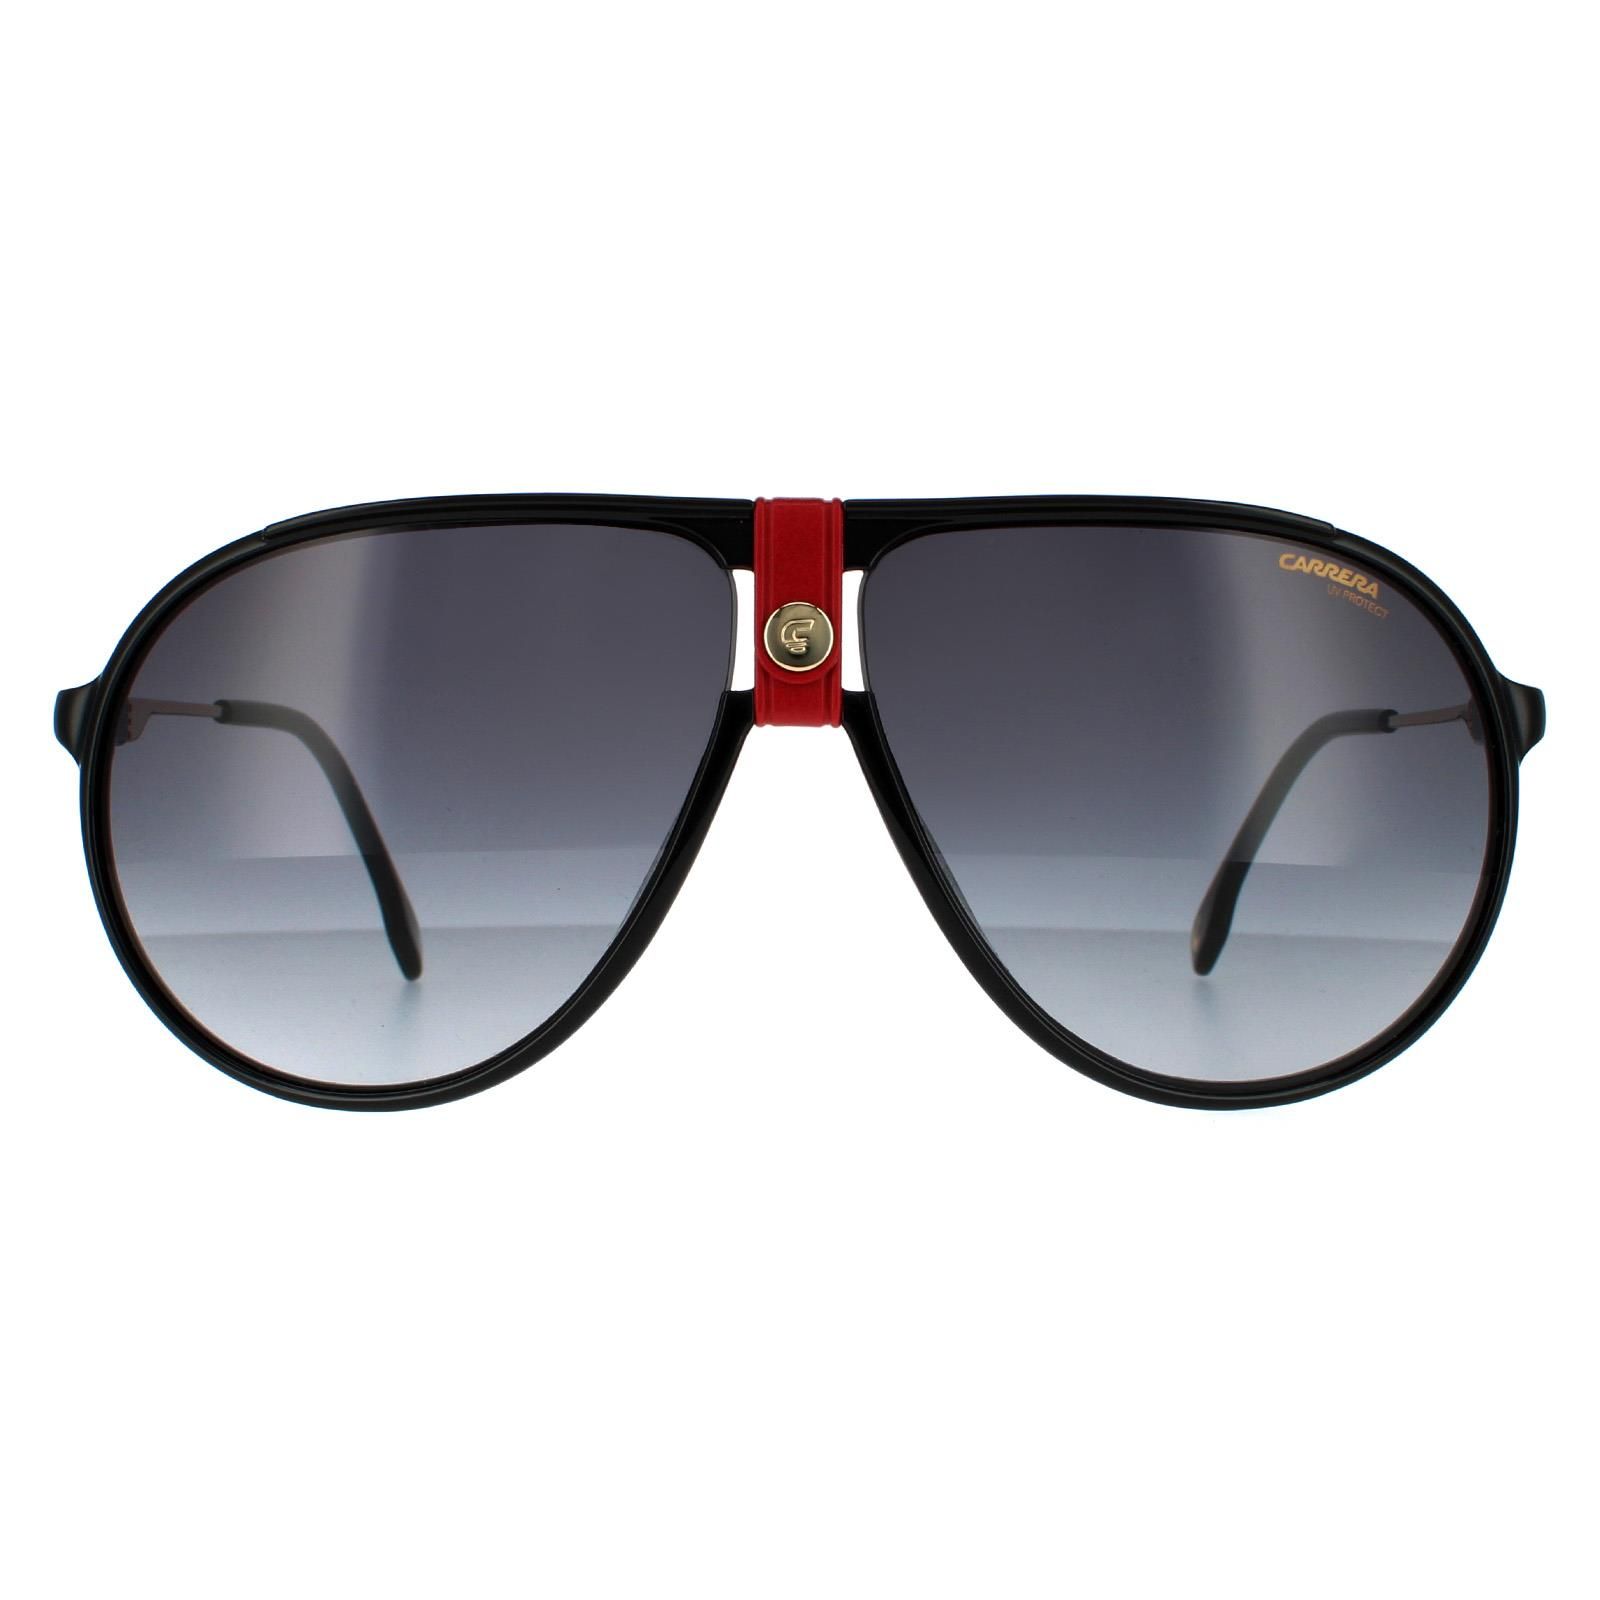 Carrera Aviator Mens Gold Red and Black Grey Gradient Sunglasses